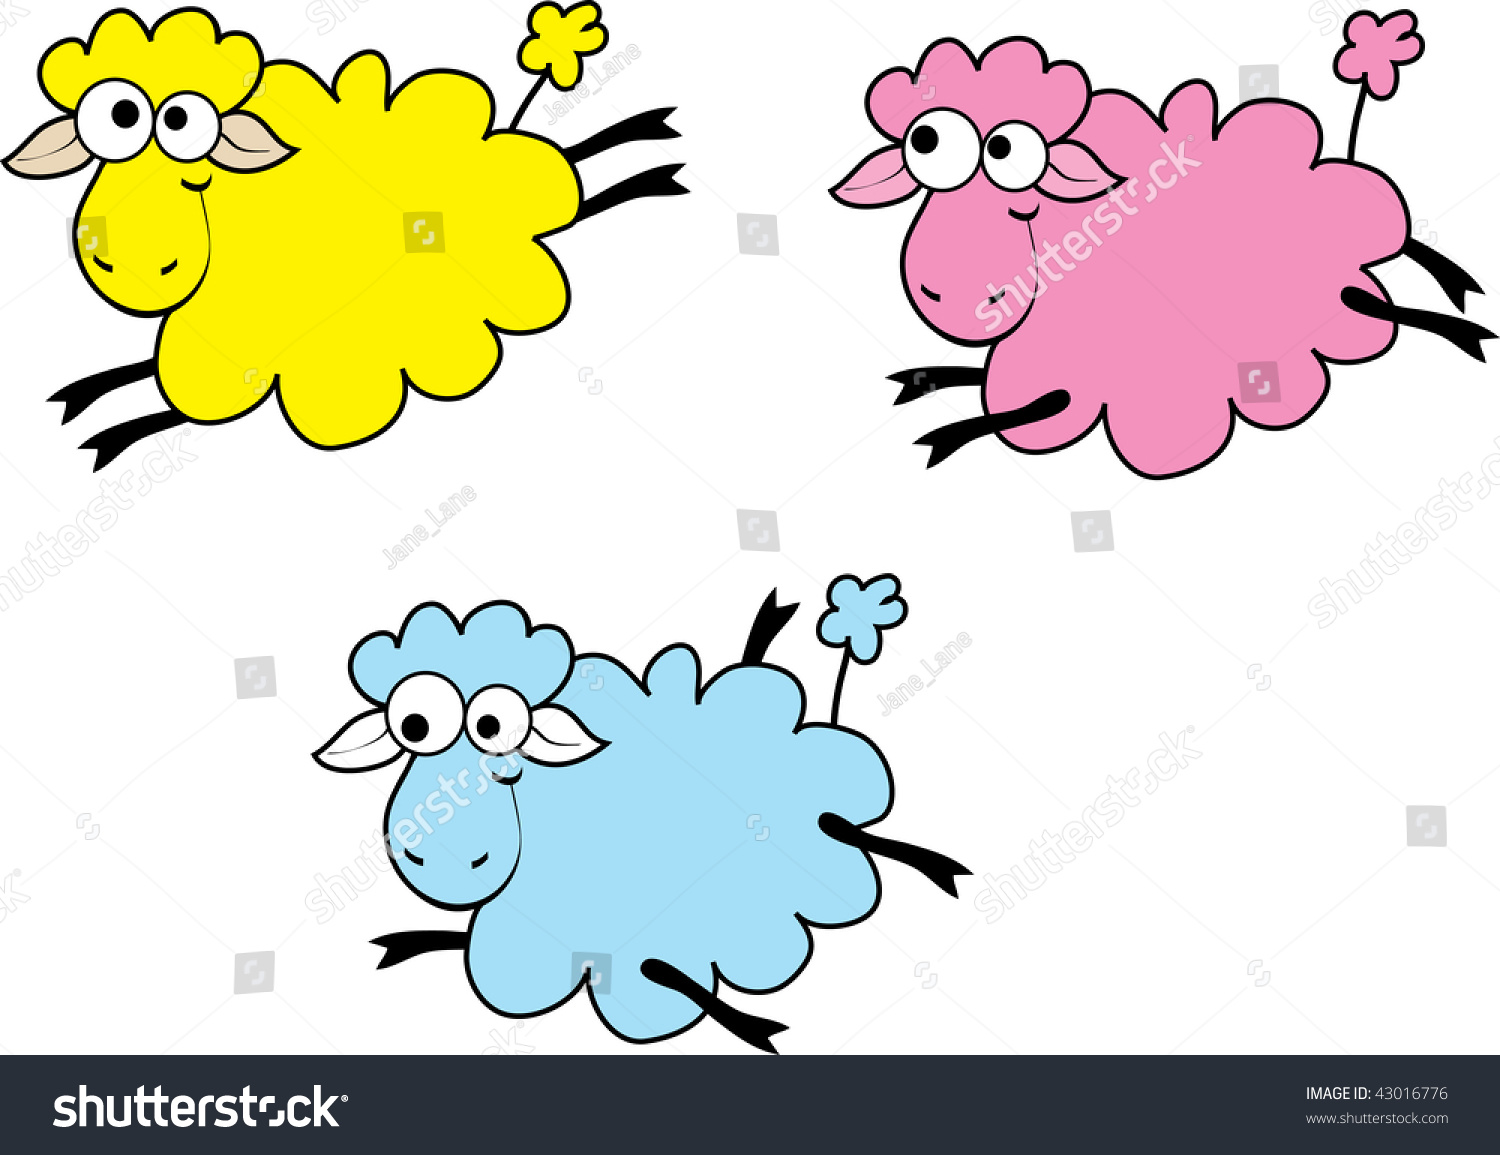 Funny Sheep Stock Photo 43016776 : Shutterstock